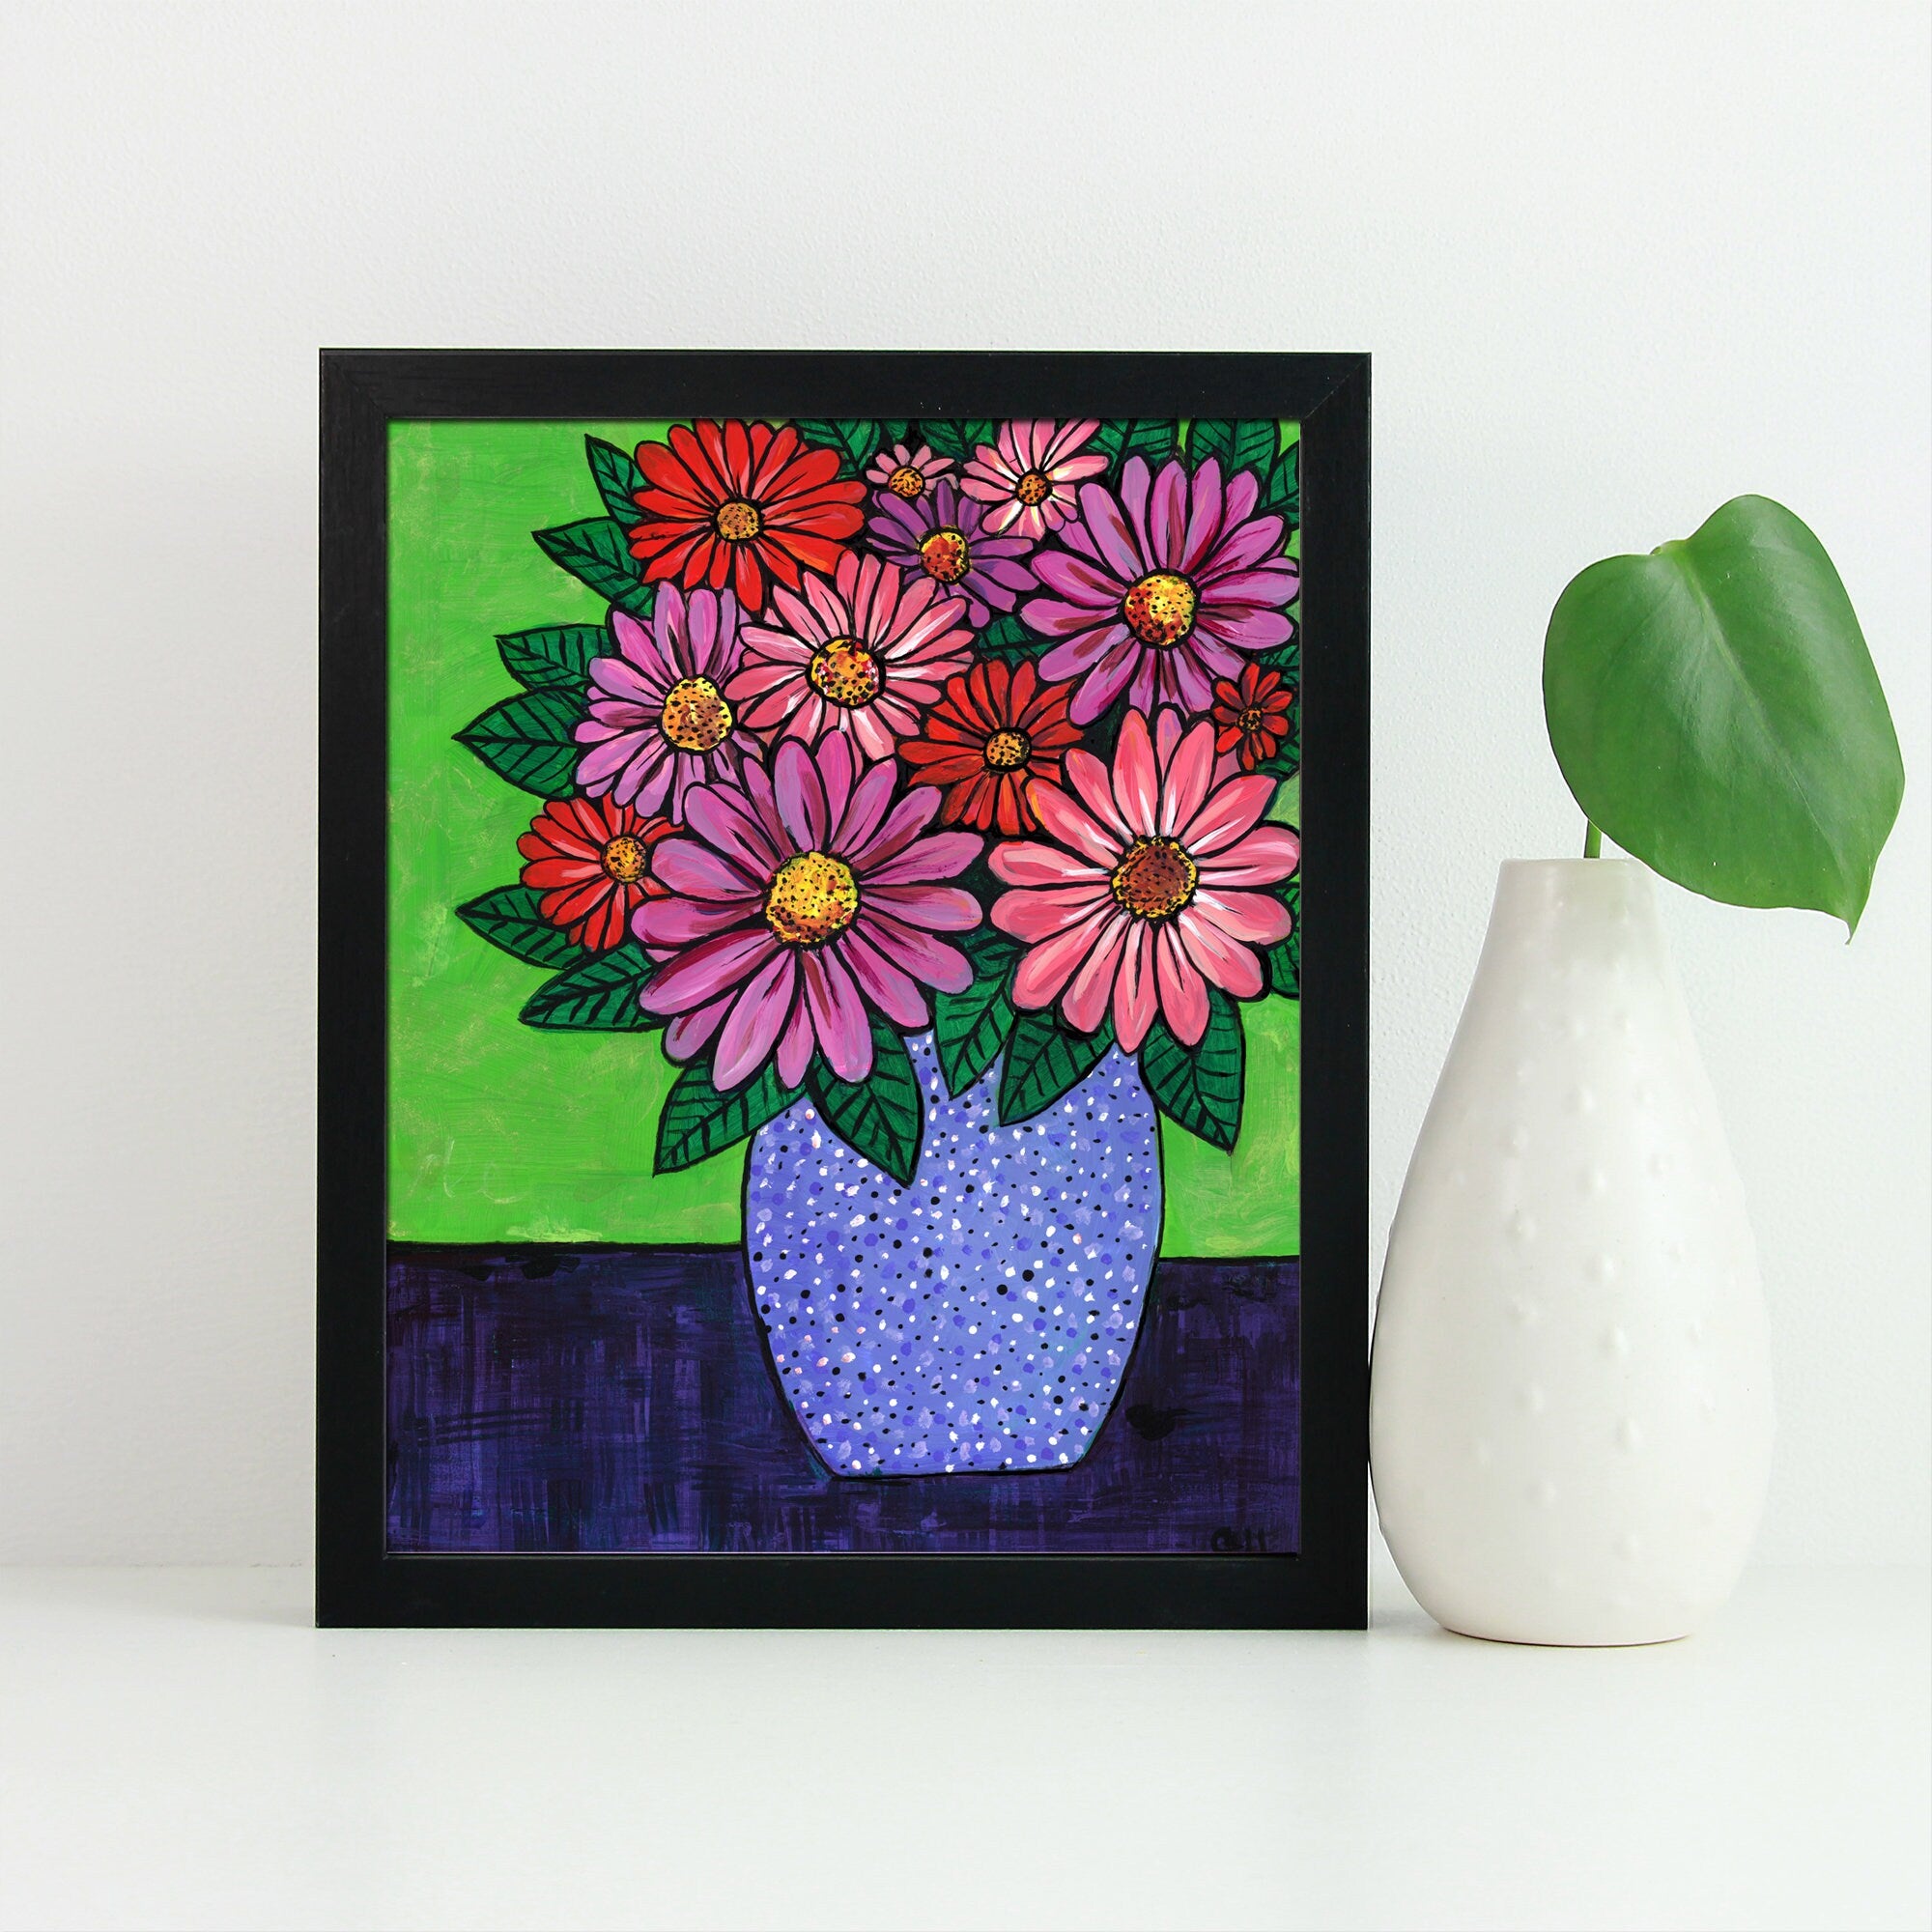 Gerbera Daisy Art Print - Vase of Gerbera Daisies Giclée Print - Colorful Flower Wall Art - 8x10 with optional mat